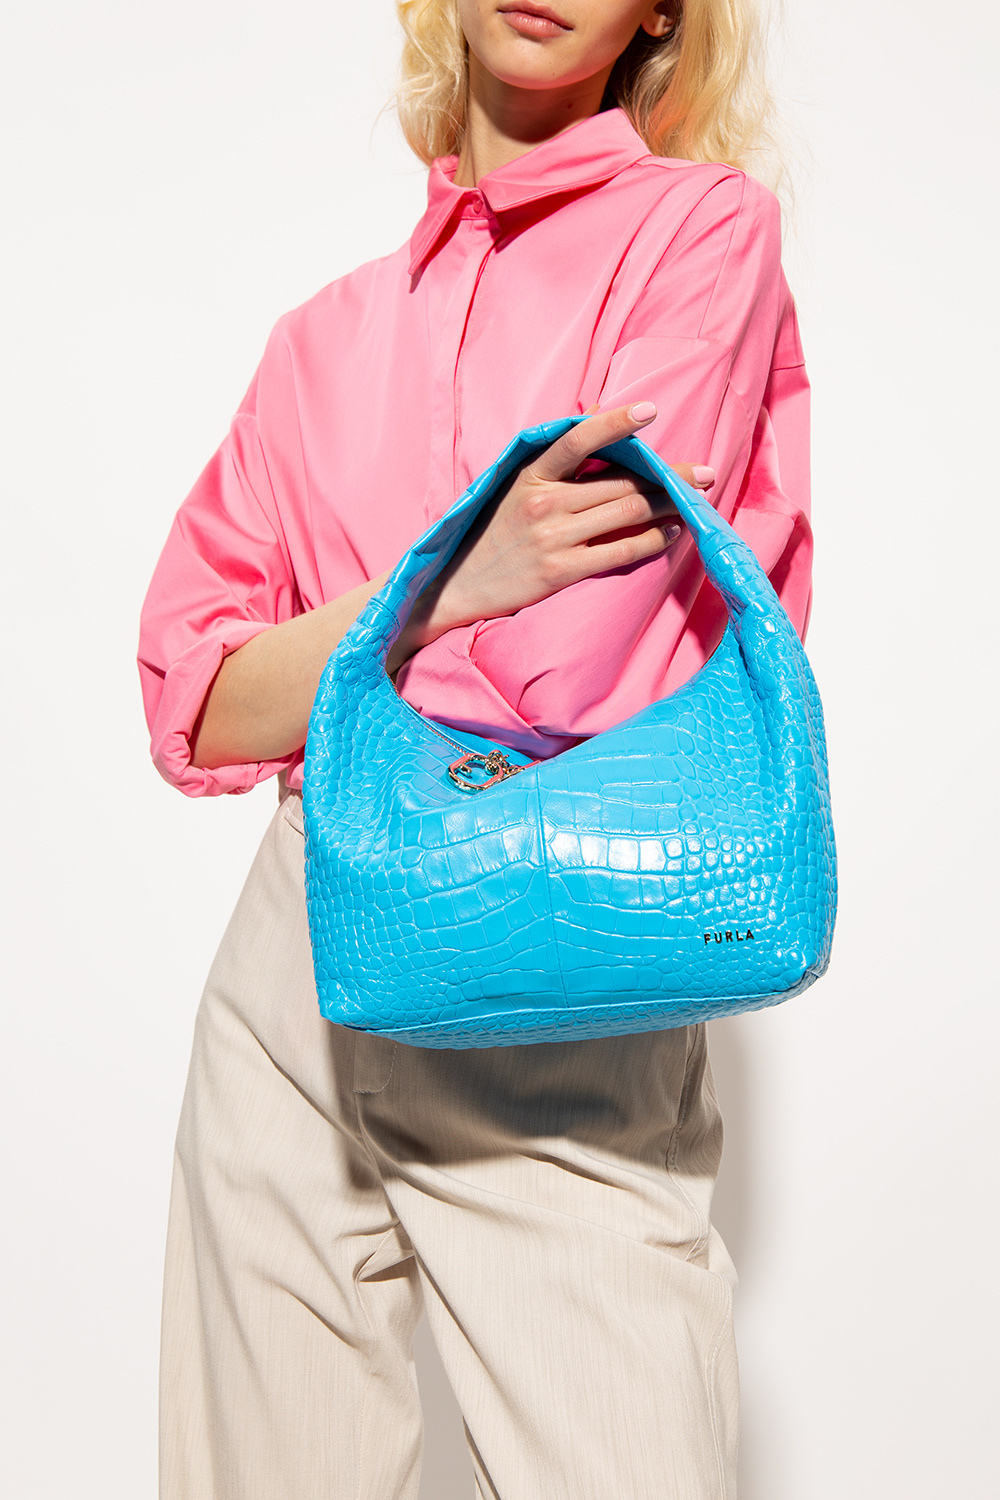 FURLA FURLA GINGER S HOBO, | Lilac Women‘s Handbag | YOOX